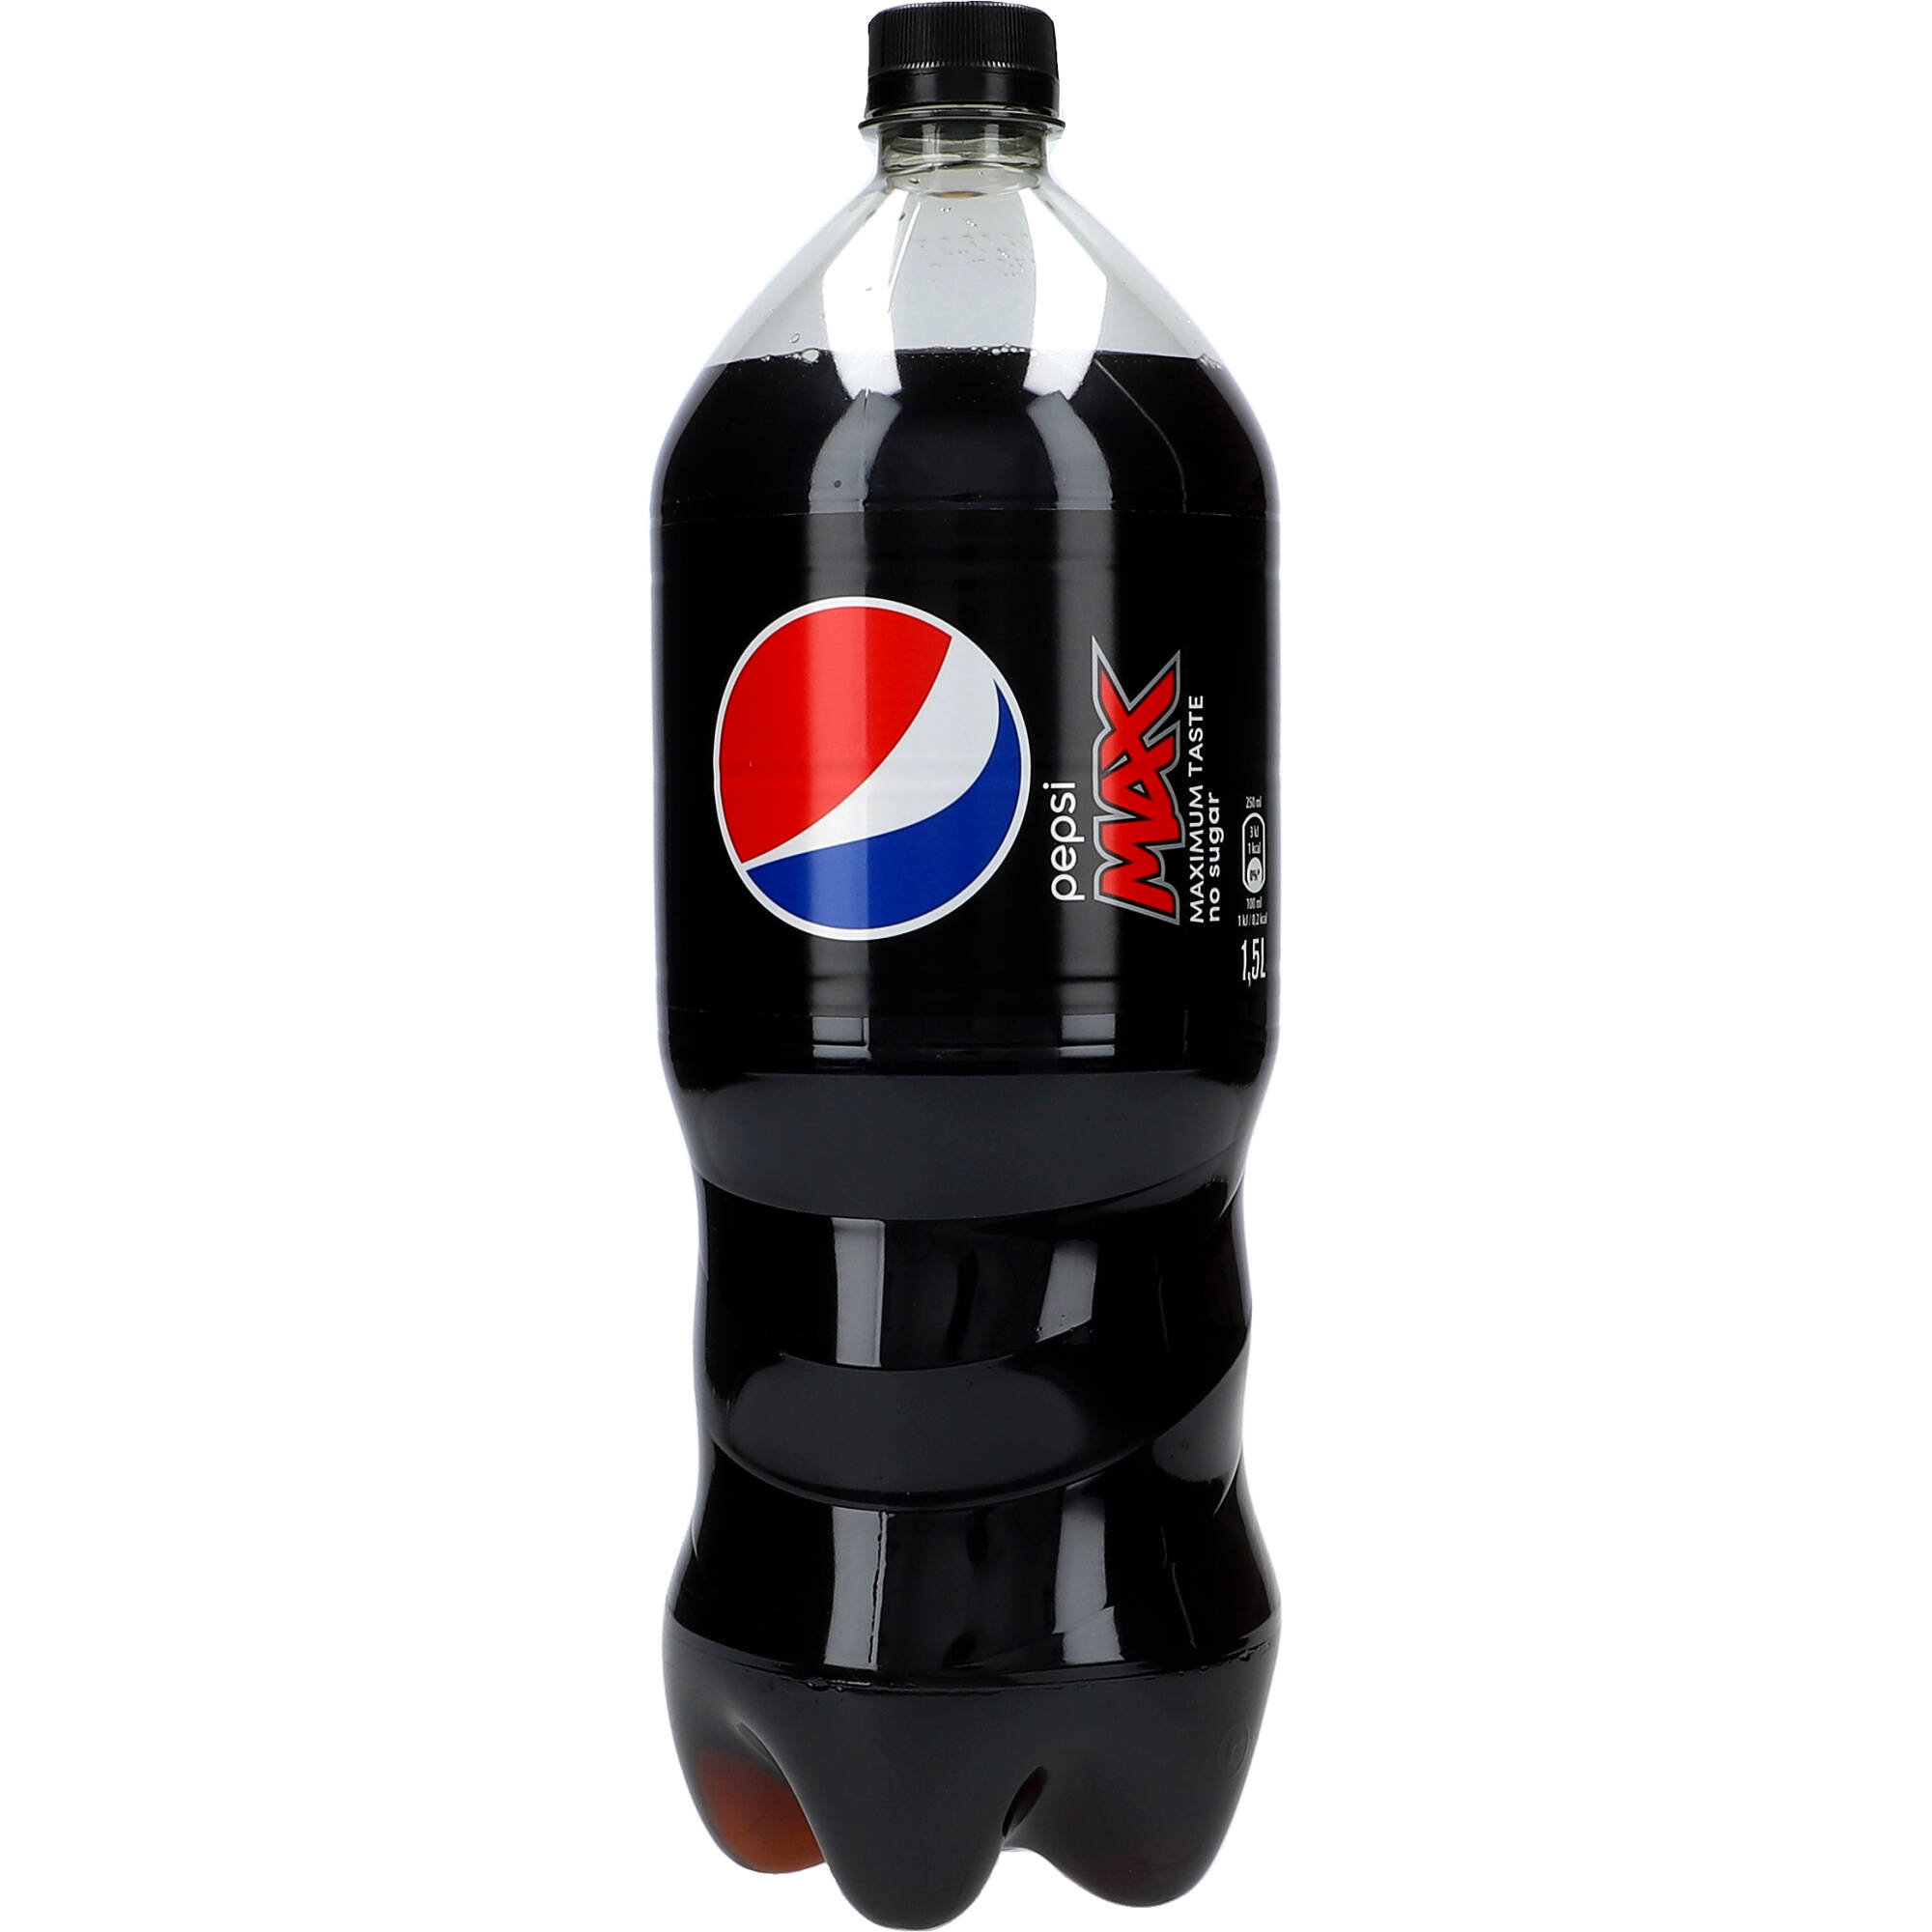 Sodastream Pepsi MAX Lime smag 1100014770